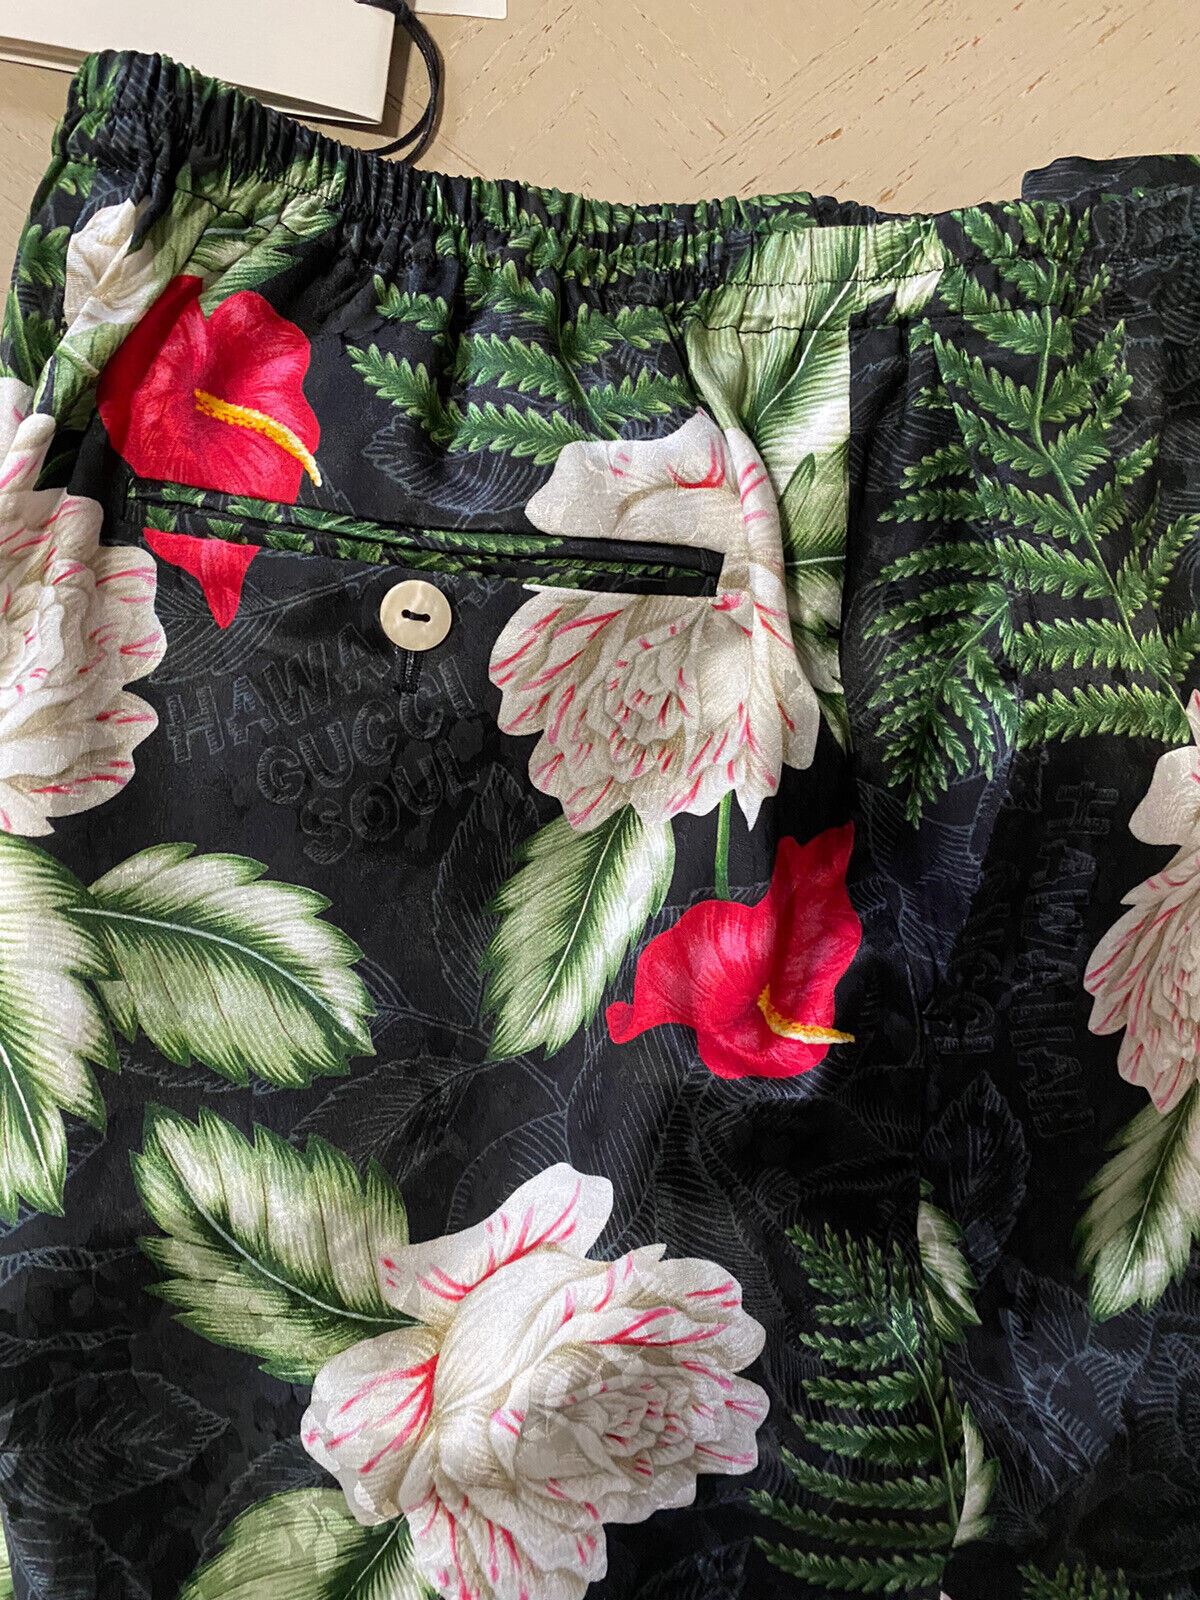 СЗТ $980 Gucci Мужские короткие брюки Gucci Soul Monogram черного/зеленого/мул. 34 США/50 в.д.